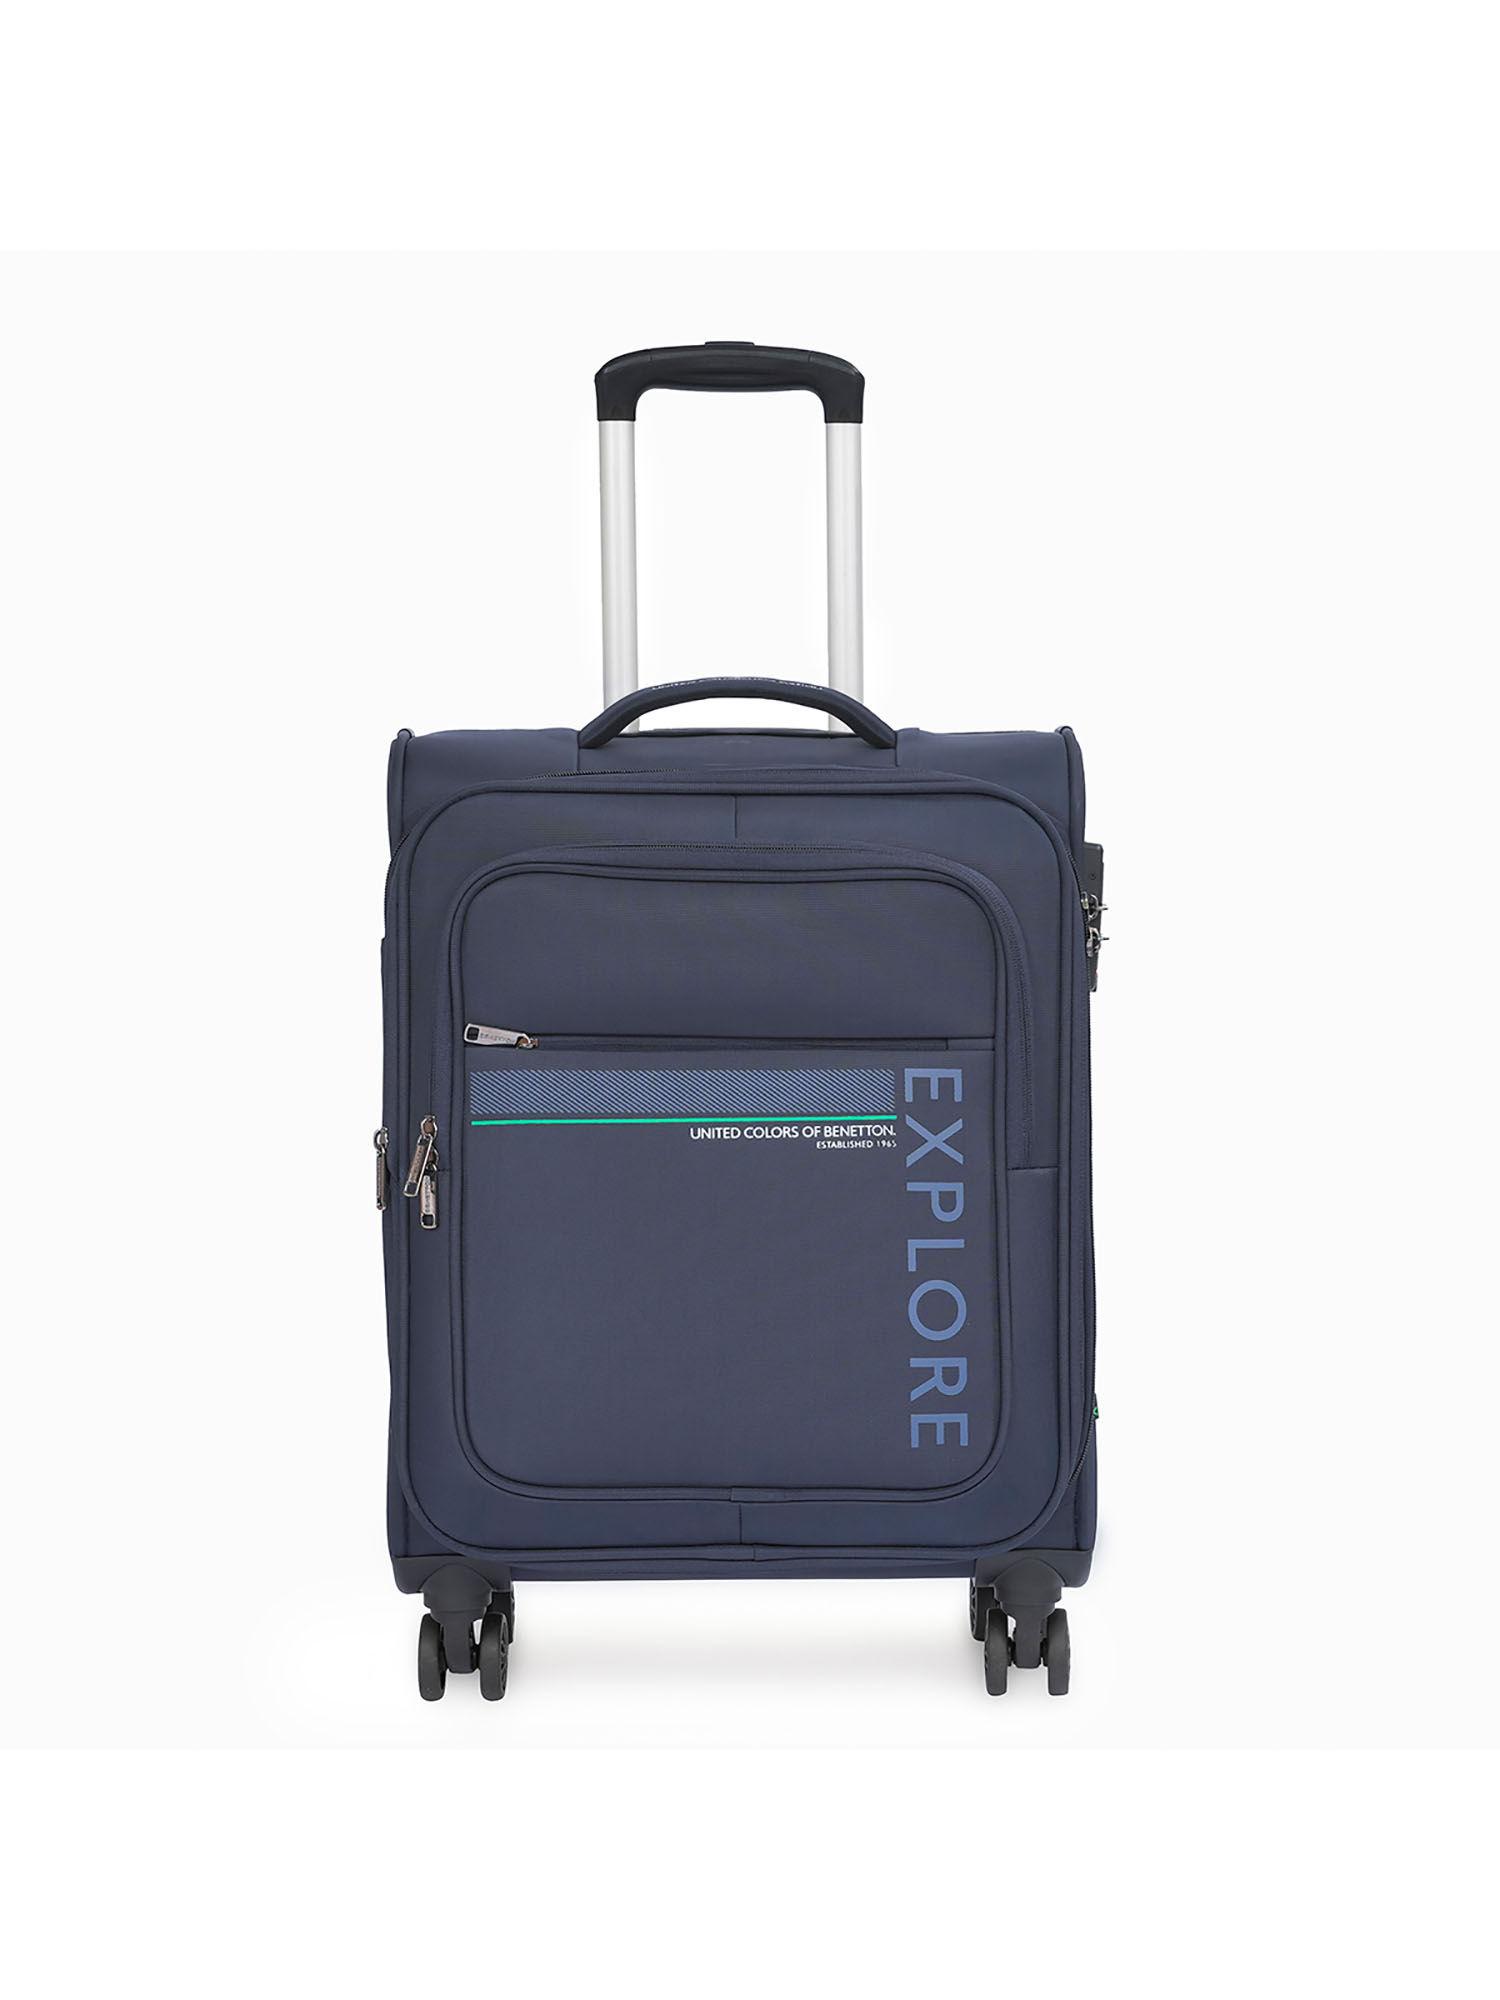 garret unisex polyester soft luggage navy blue, 58 cm trolley bag